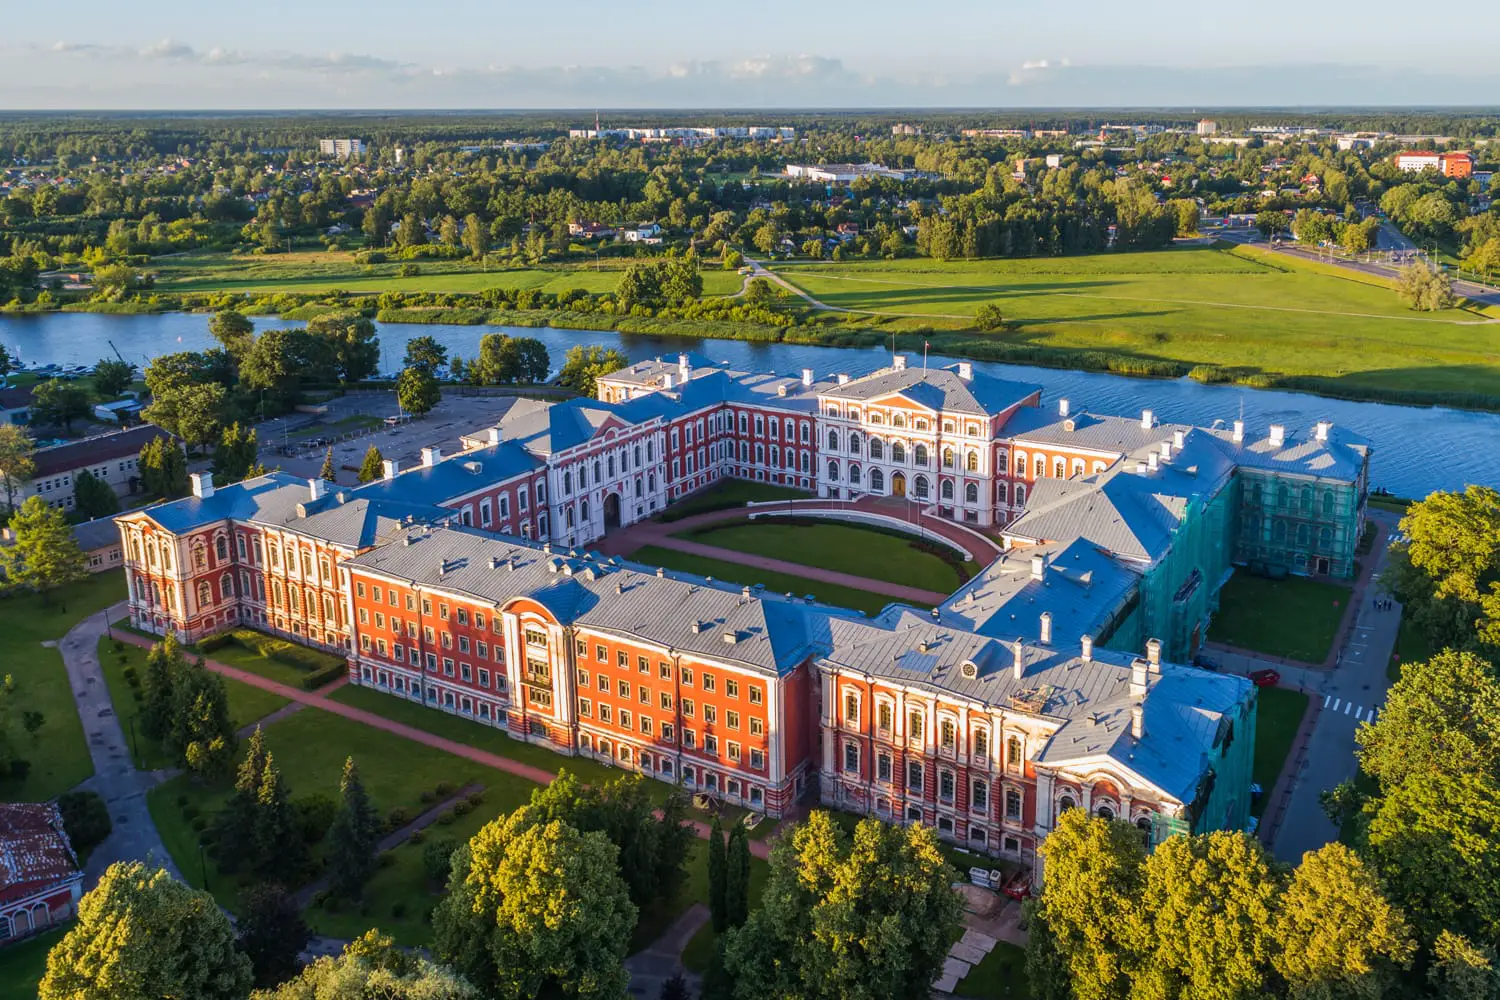 Aerial view of Jelgava palace in Latvia